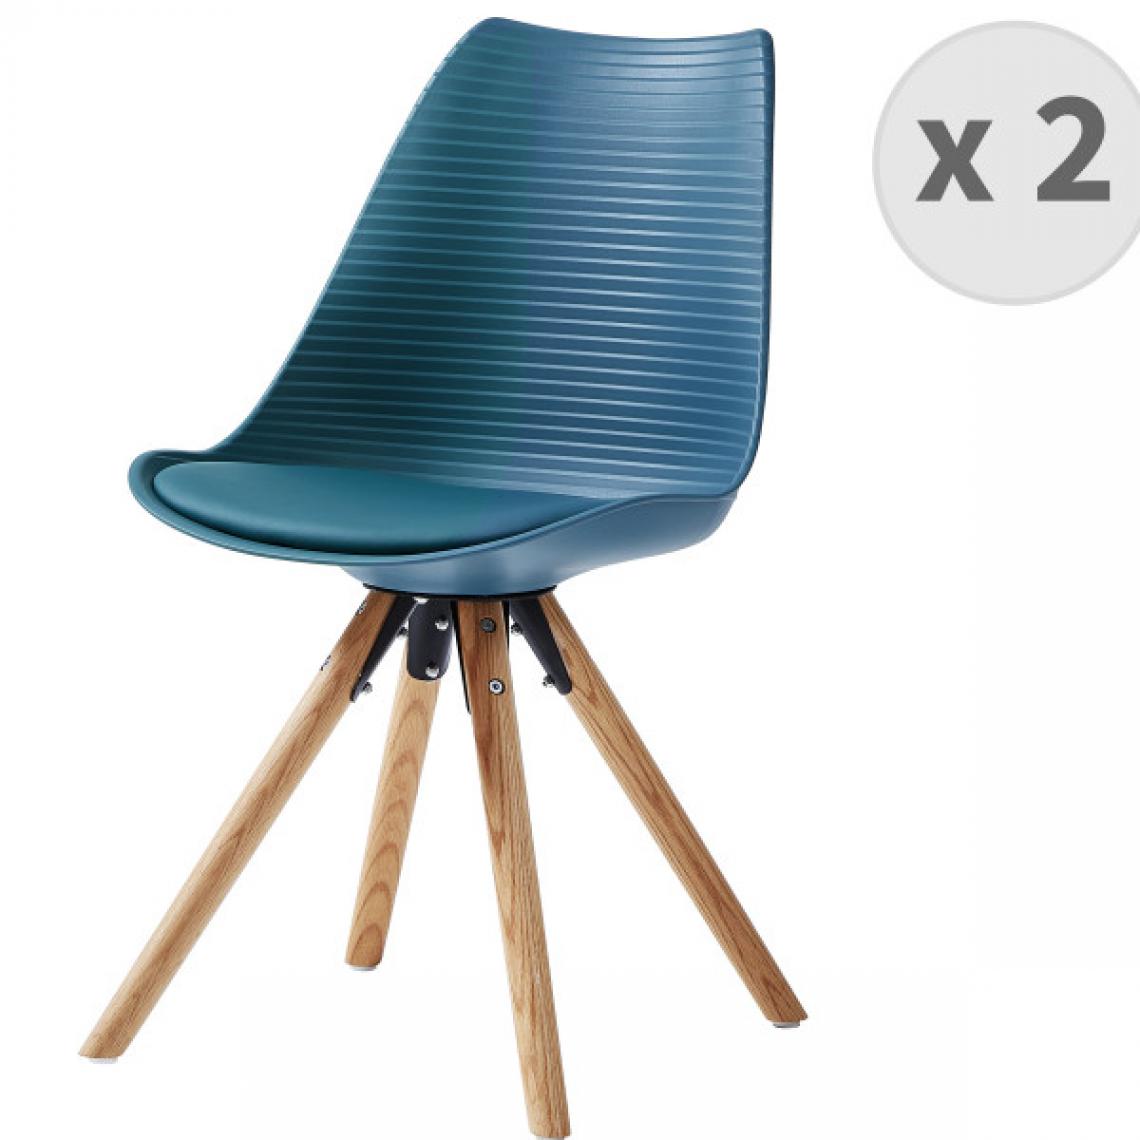 Moloo - CROSS-Chaise scandinave bleu canard pieds chêne (x2) - Chaises